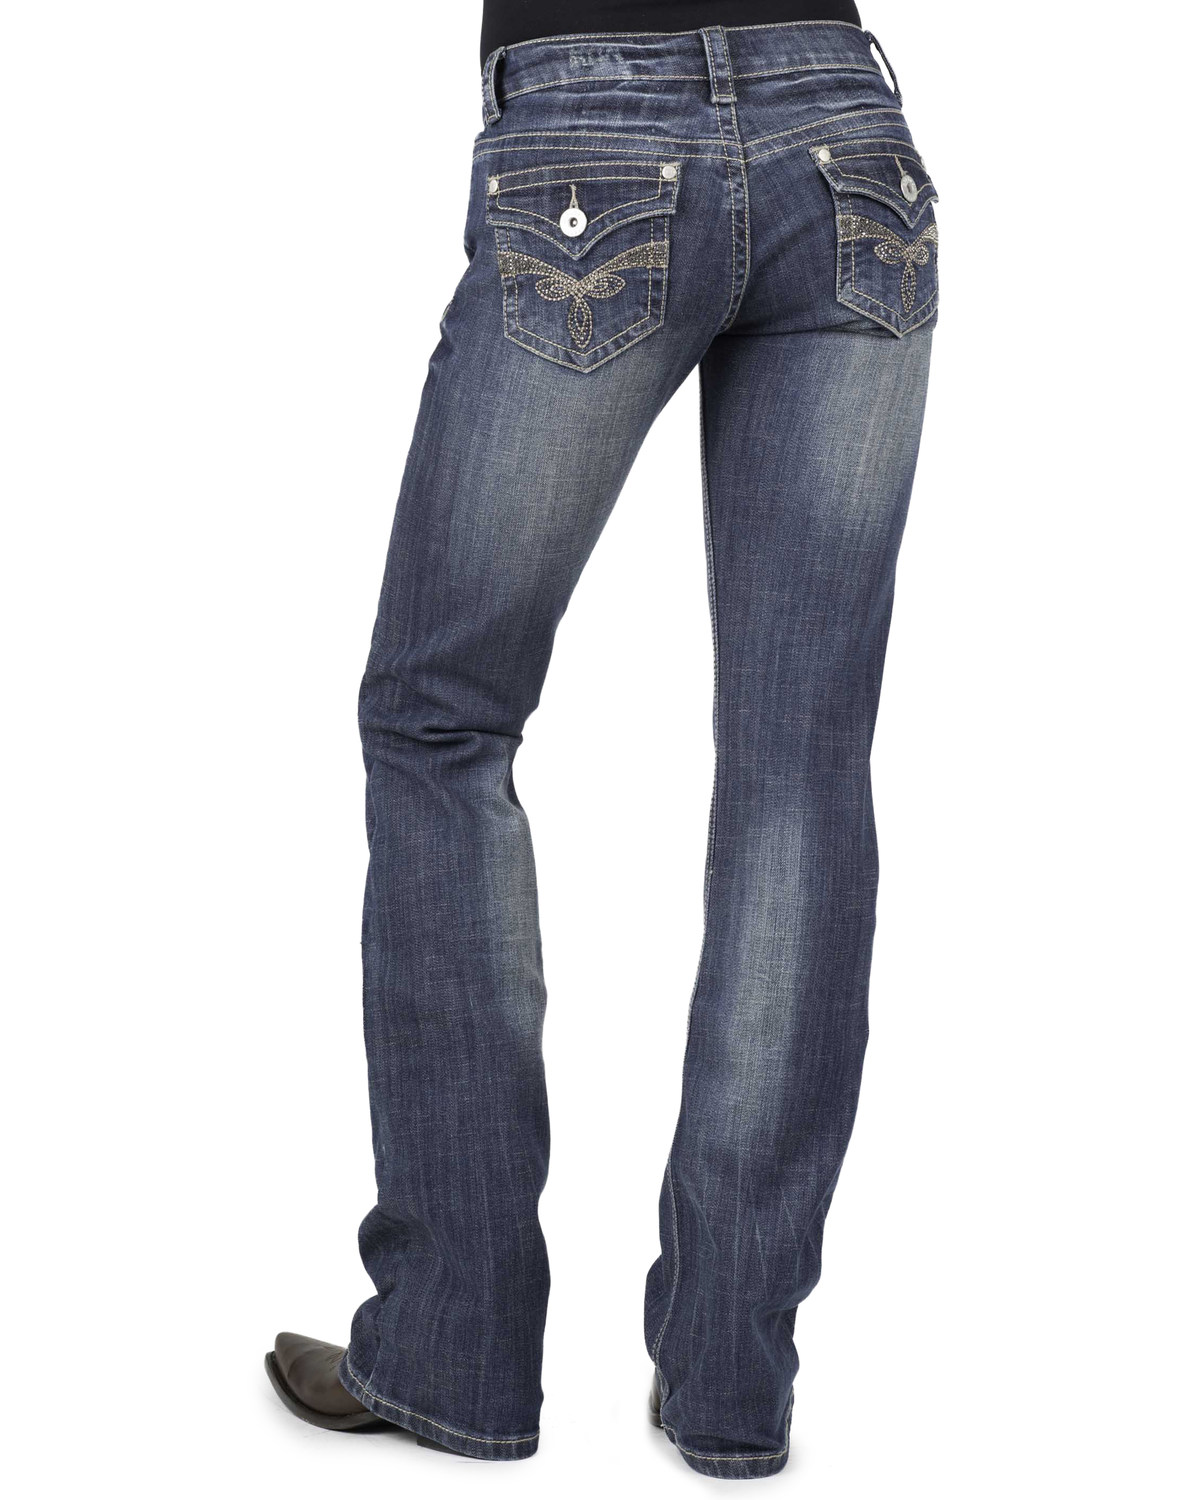 rhinestone jeans womens